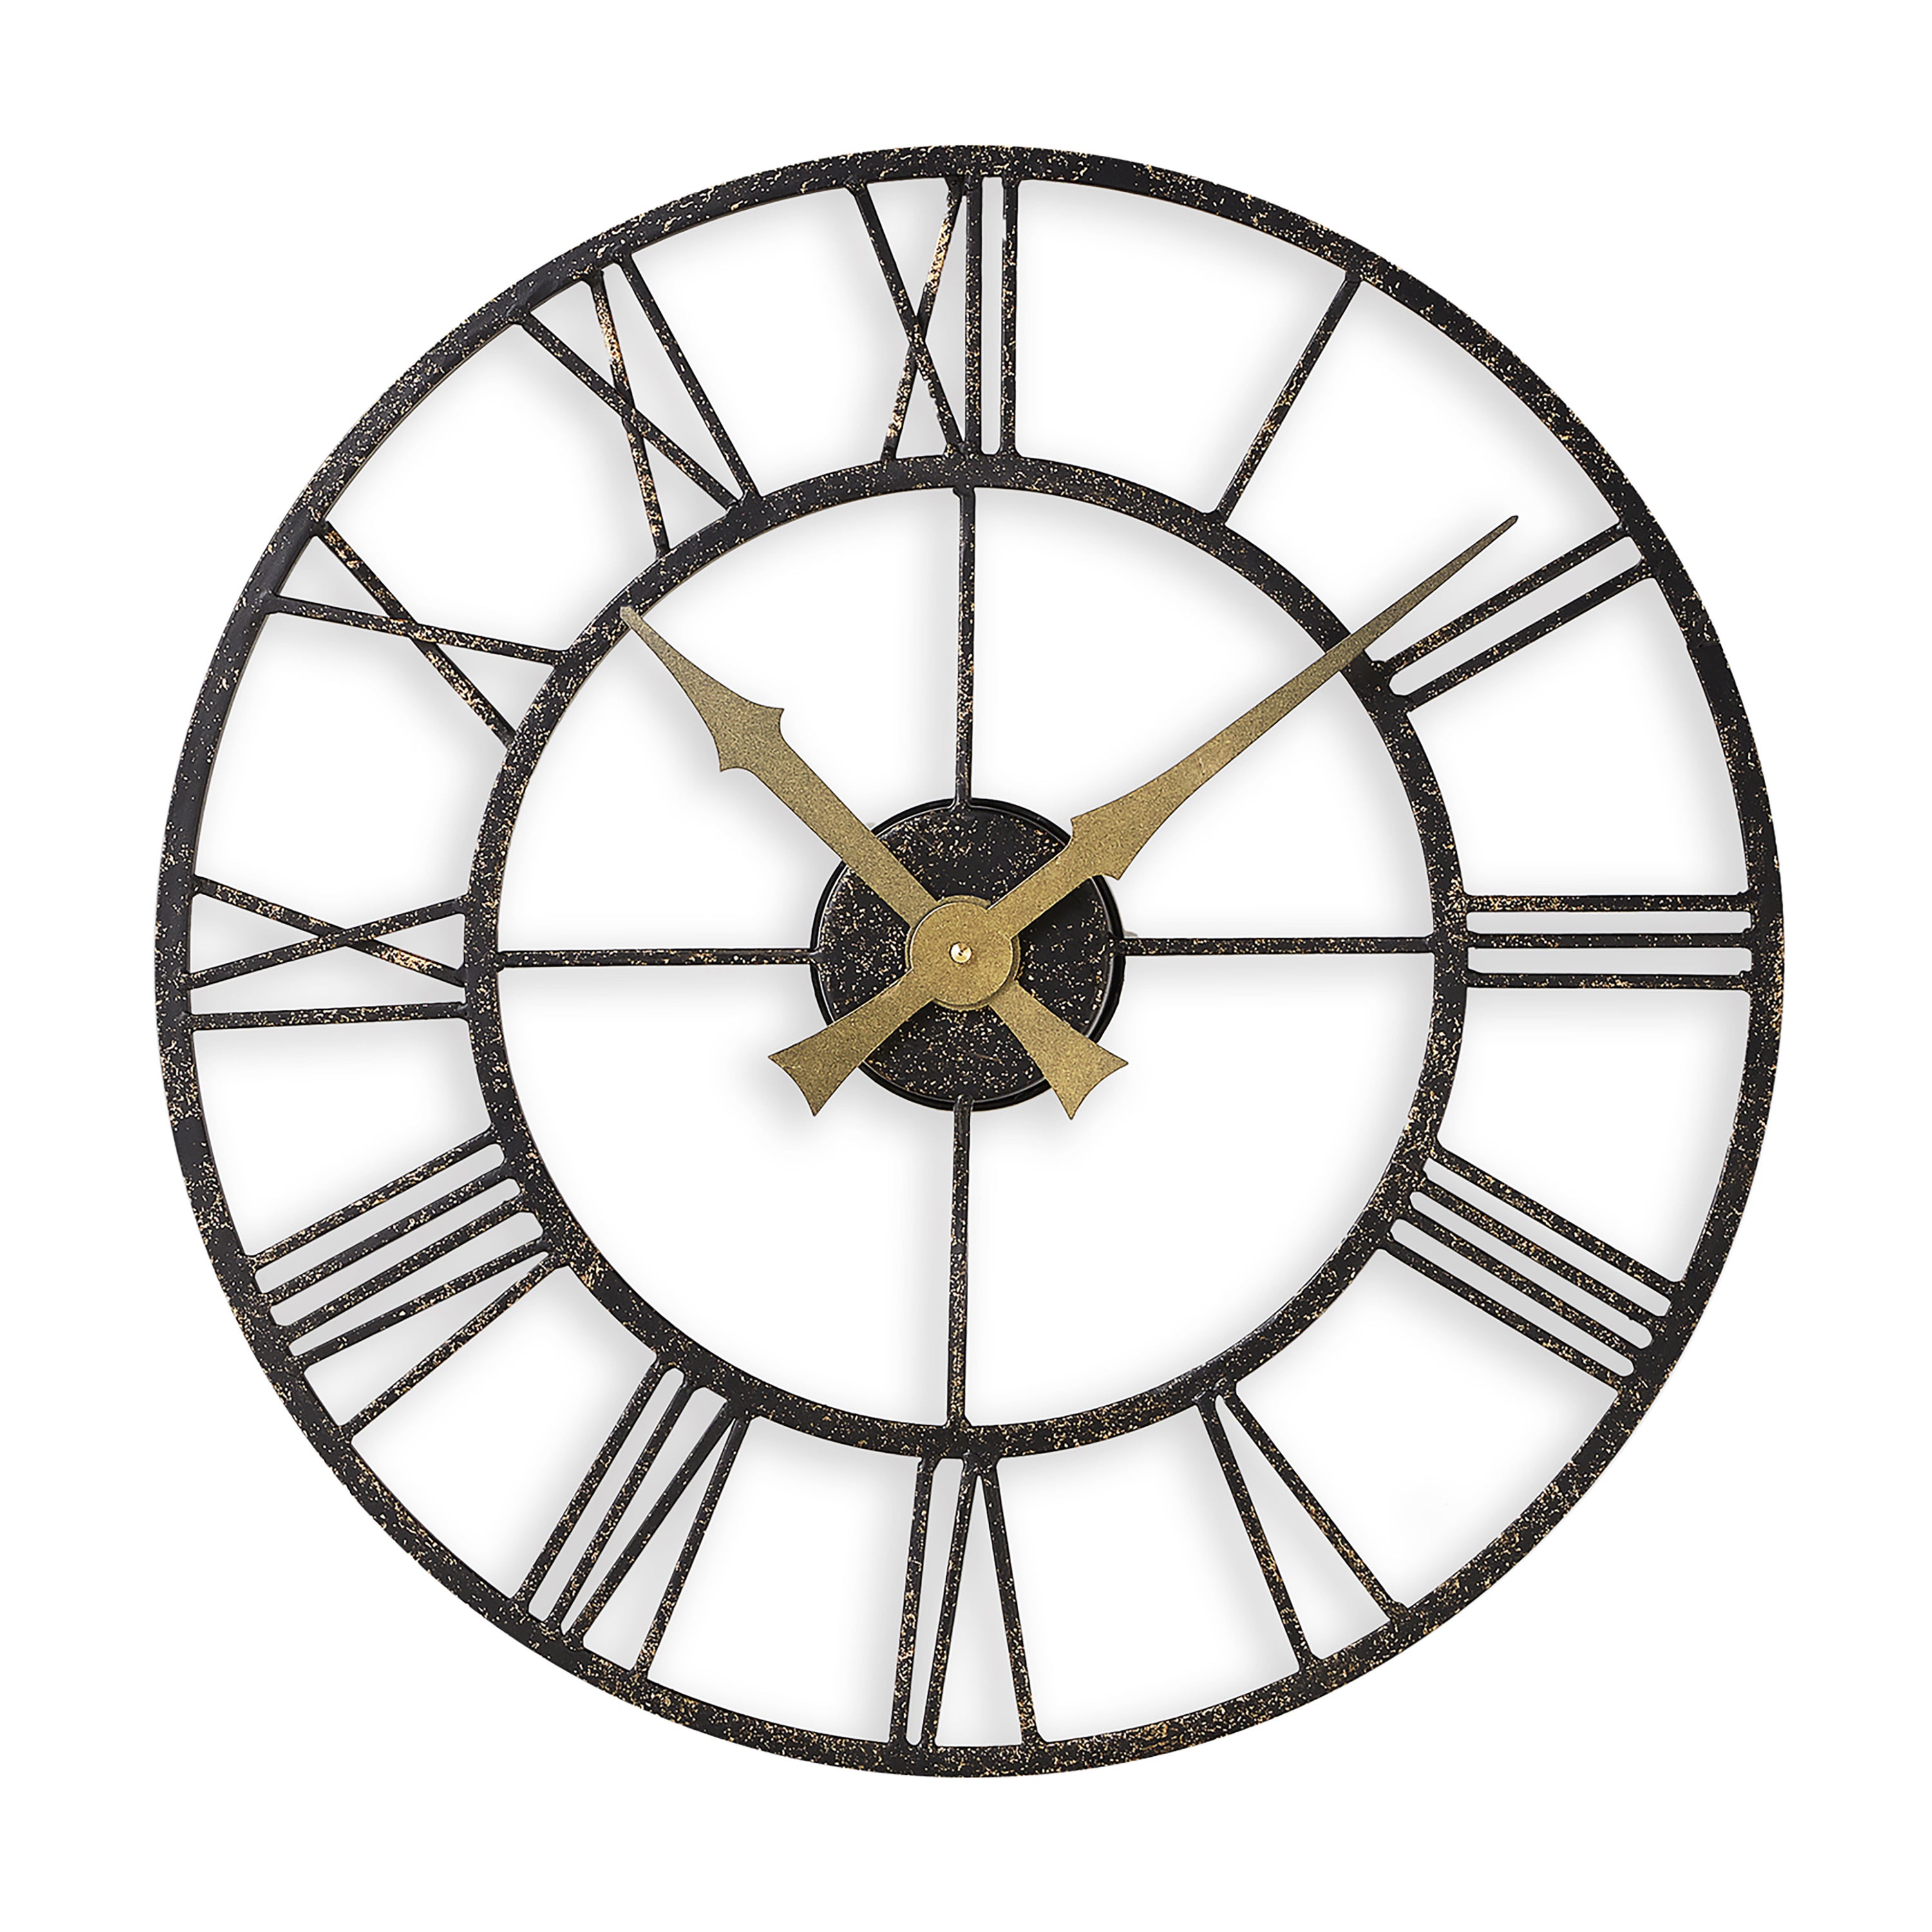 Vintage Skeleton 50cm Indoor Outdoor Wall Clock Black